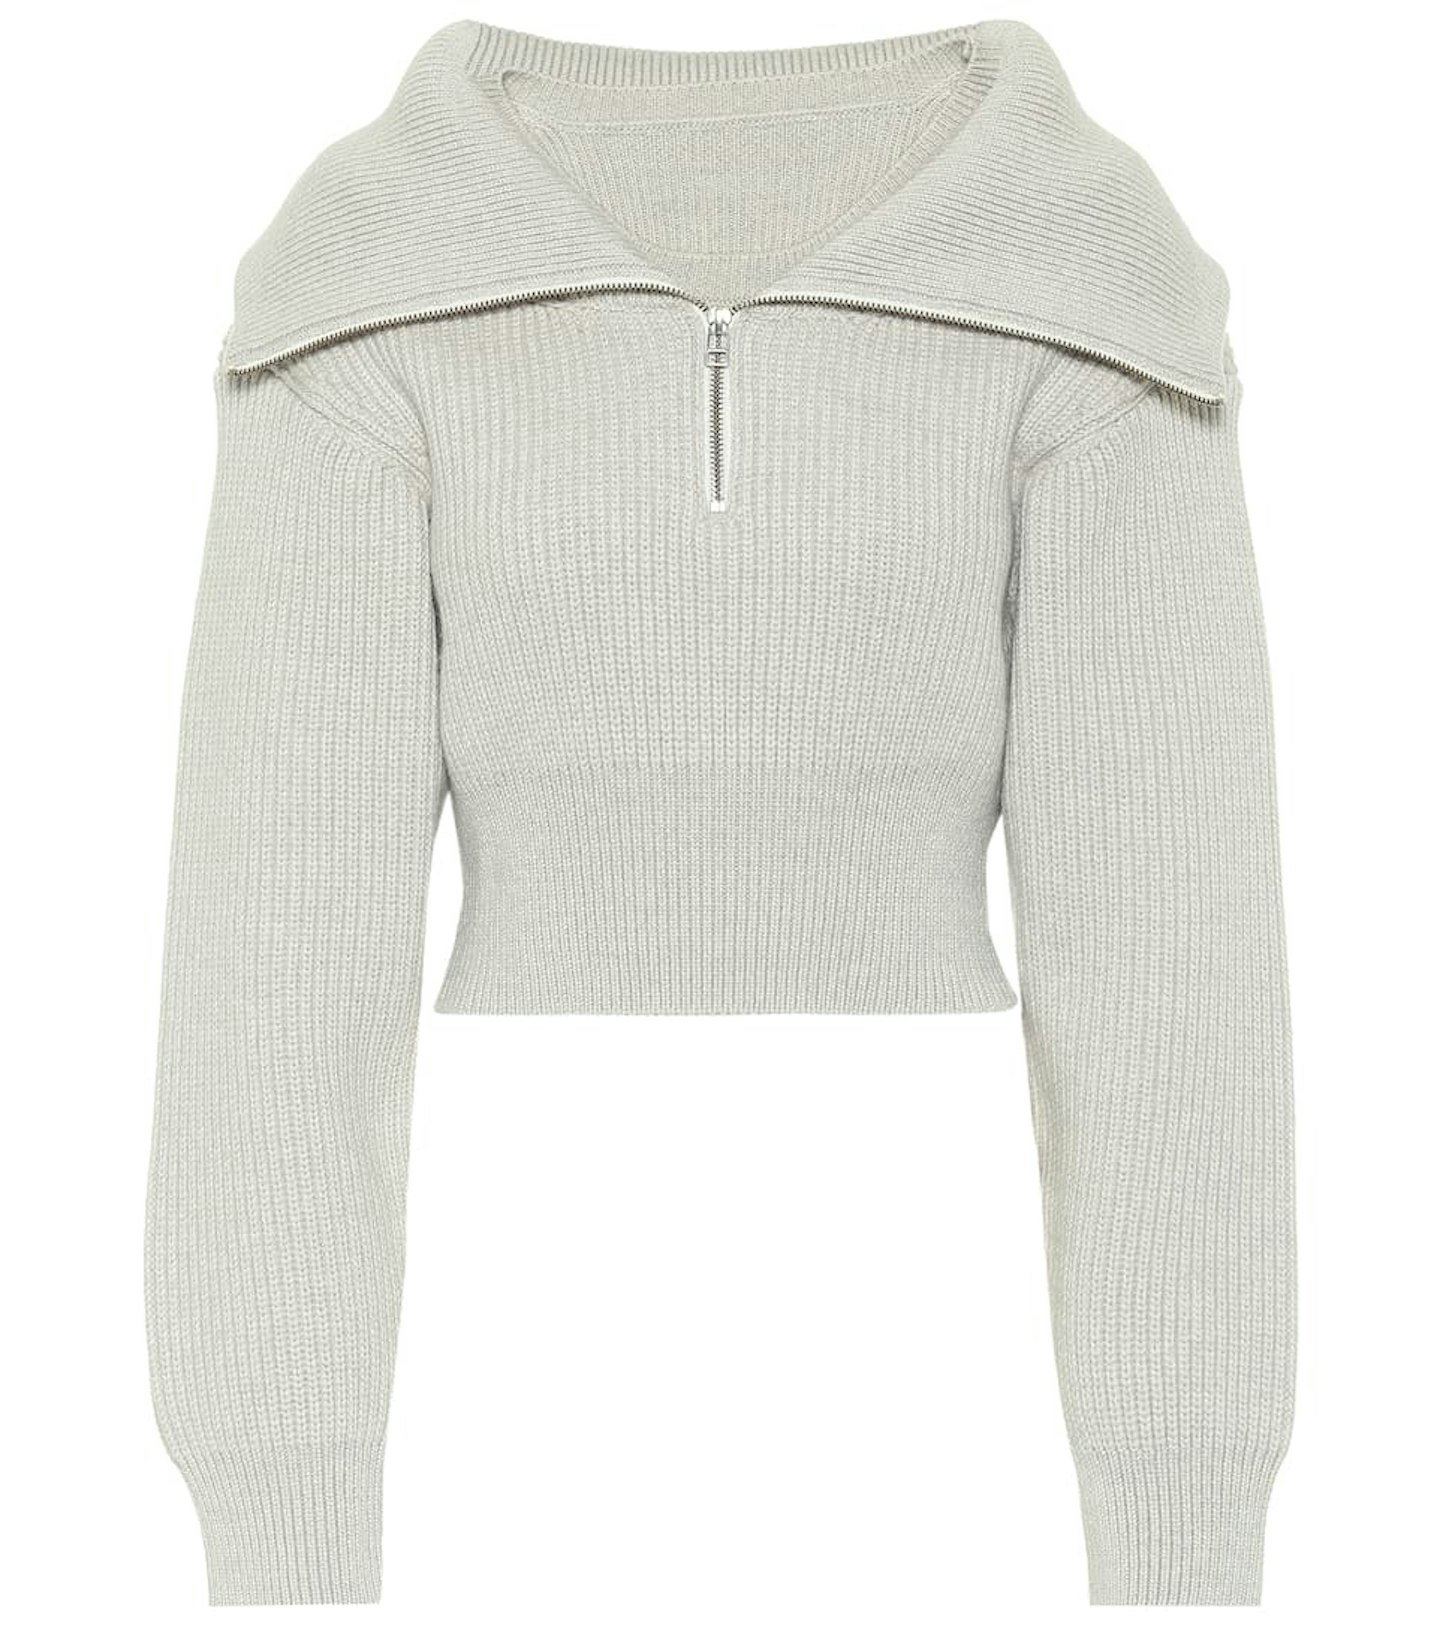 Jacquemus, La Maille Risoul Merino Wool Sweater, £510